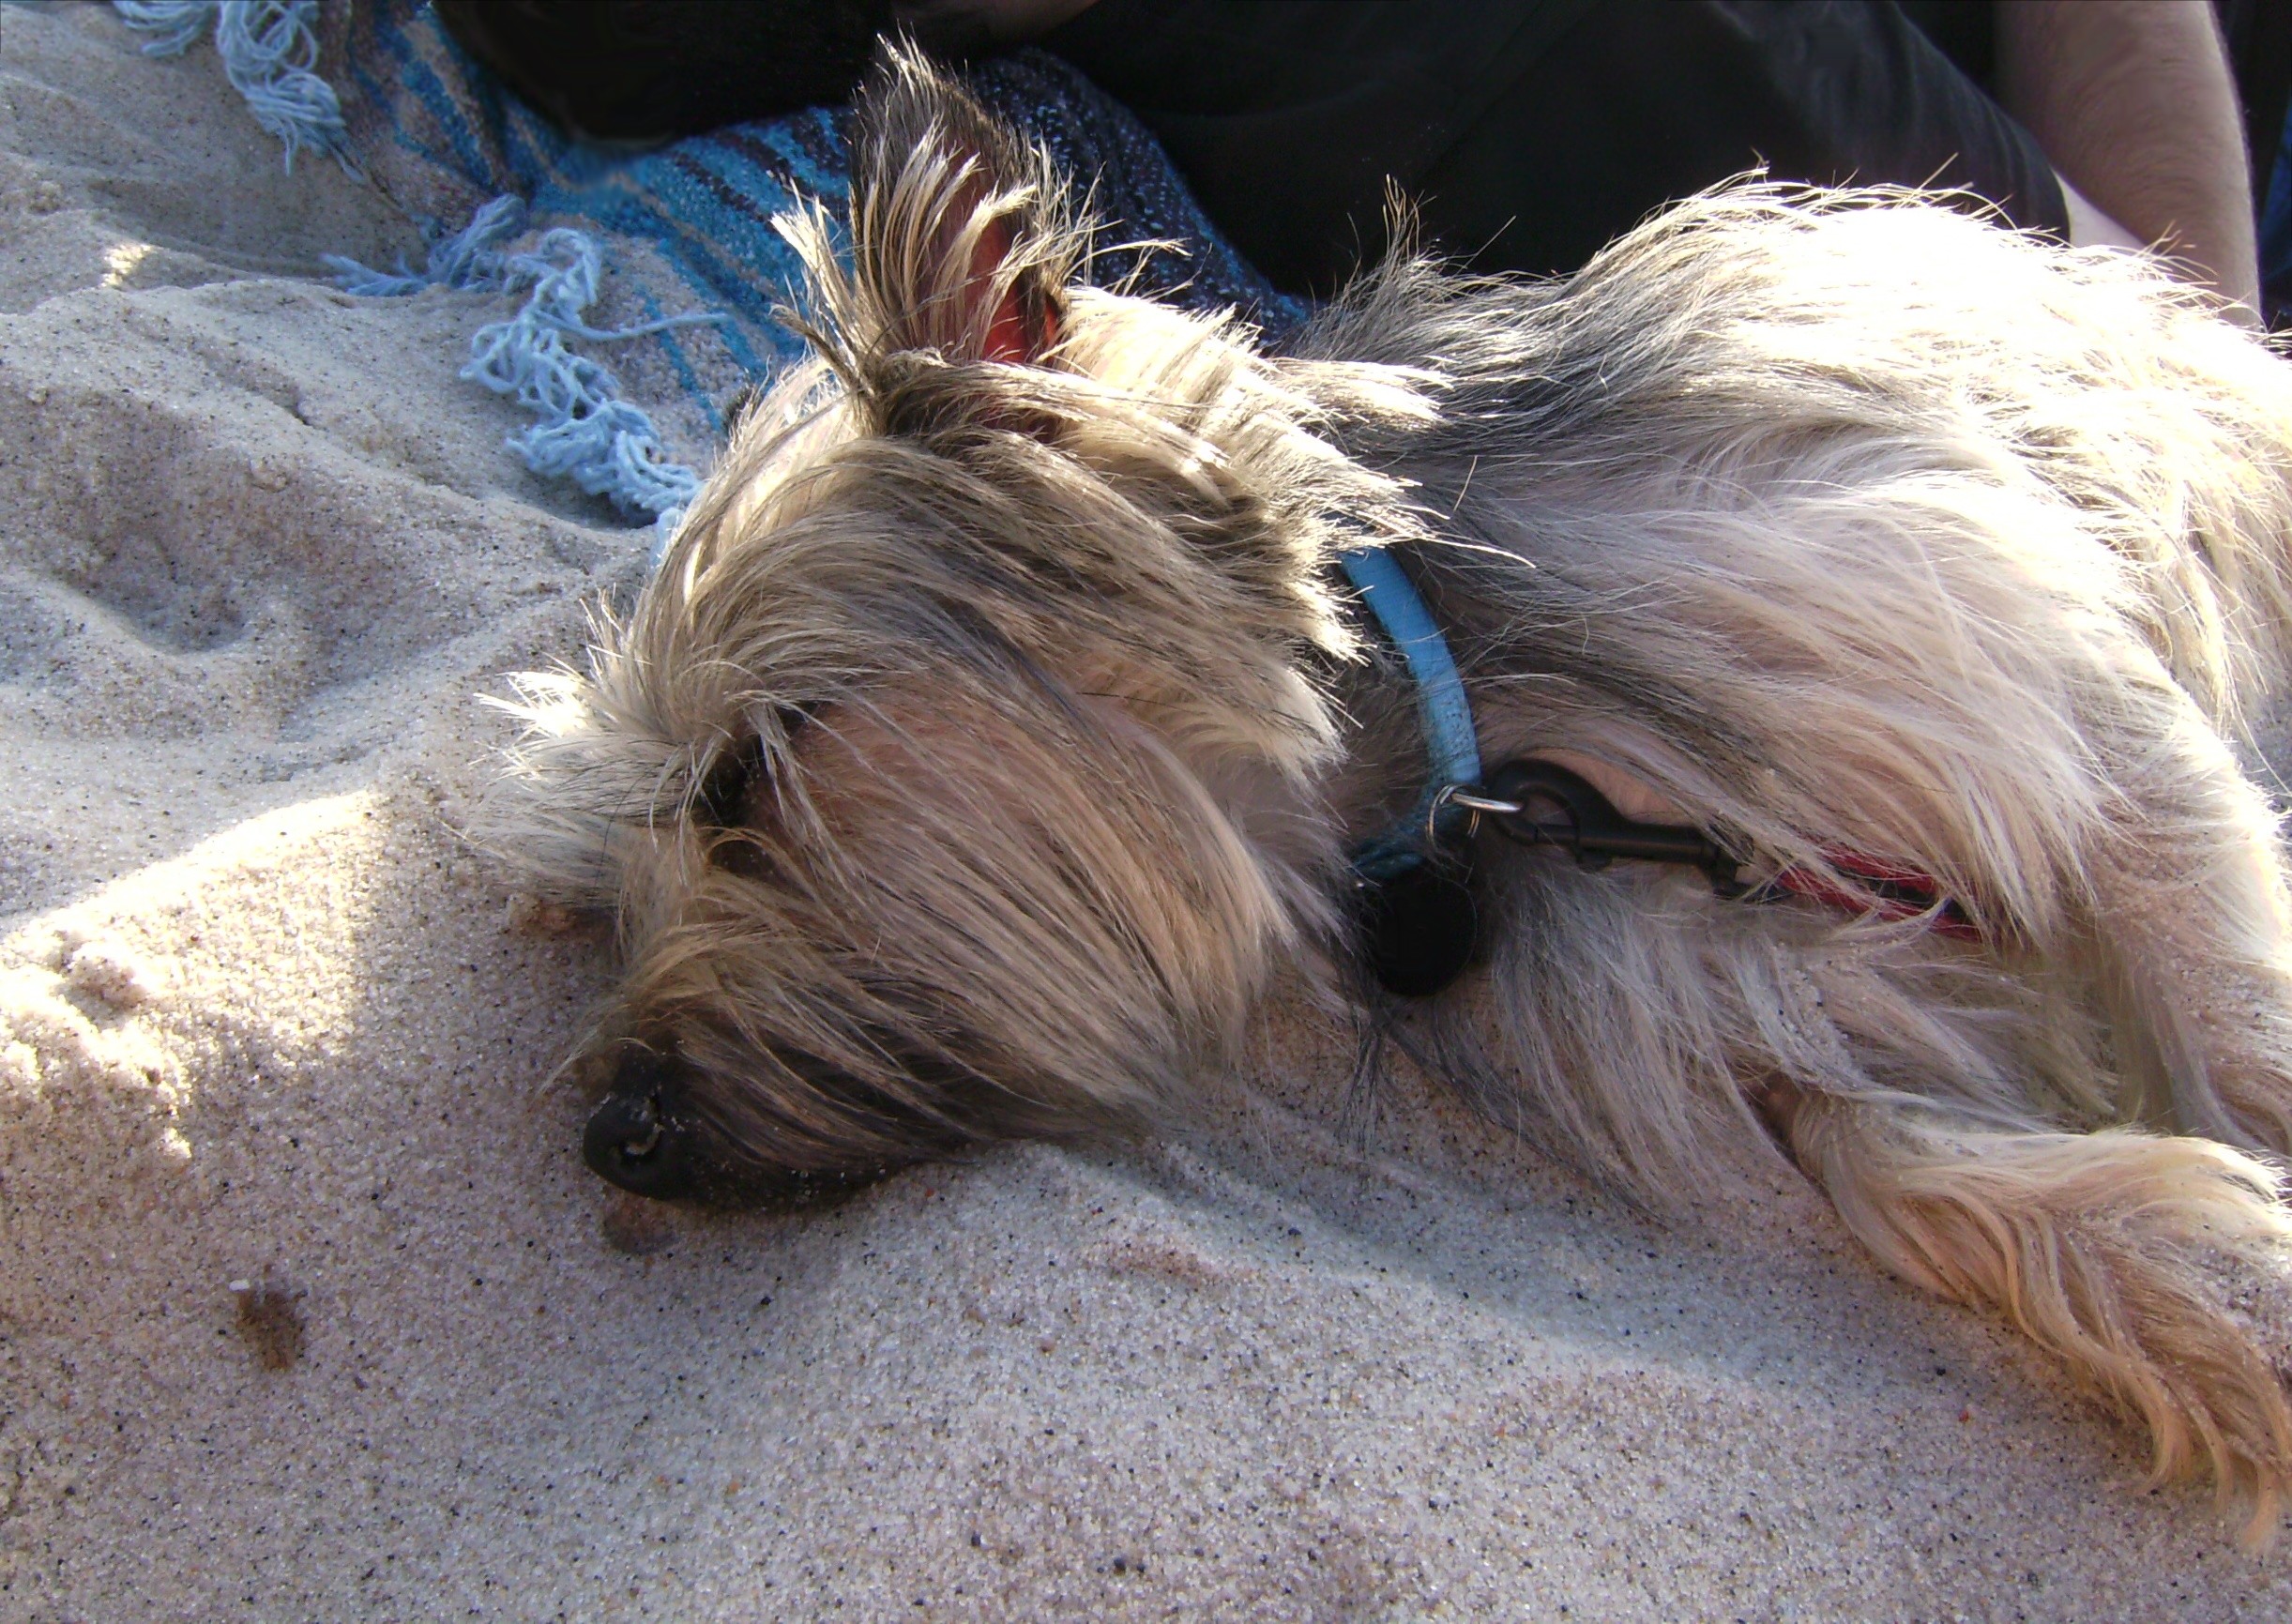 File:Cairn Terrier sleeping on the beach.jpg - Wikimedia Commons